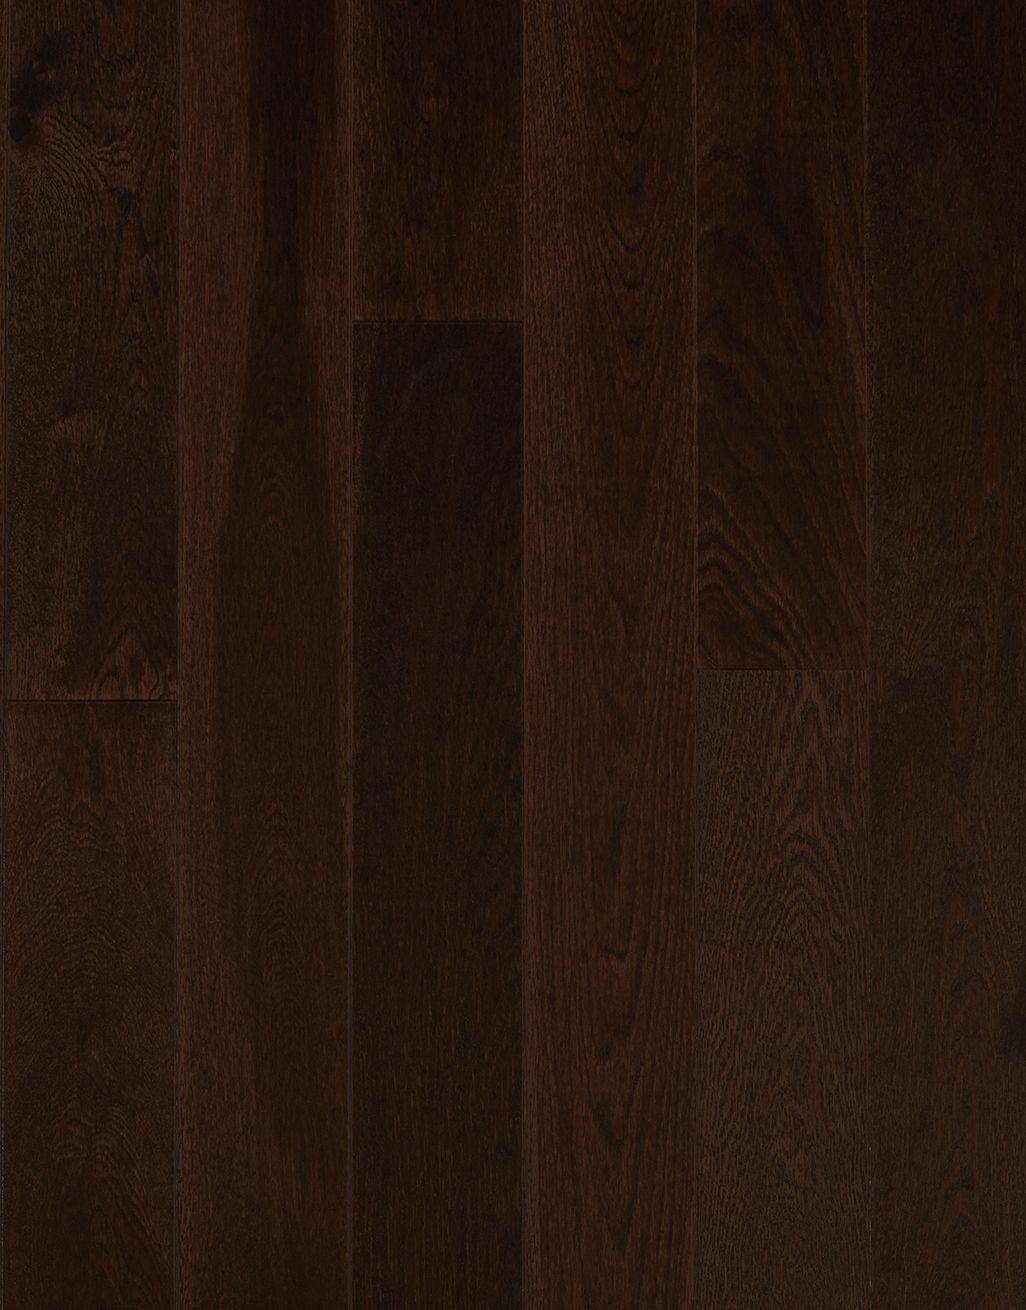 Kensington Espresso Oak Lacquered Engineered Wood Flooring 3